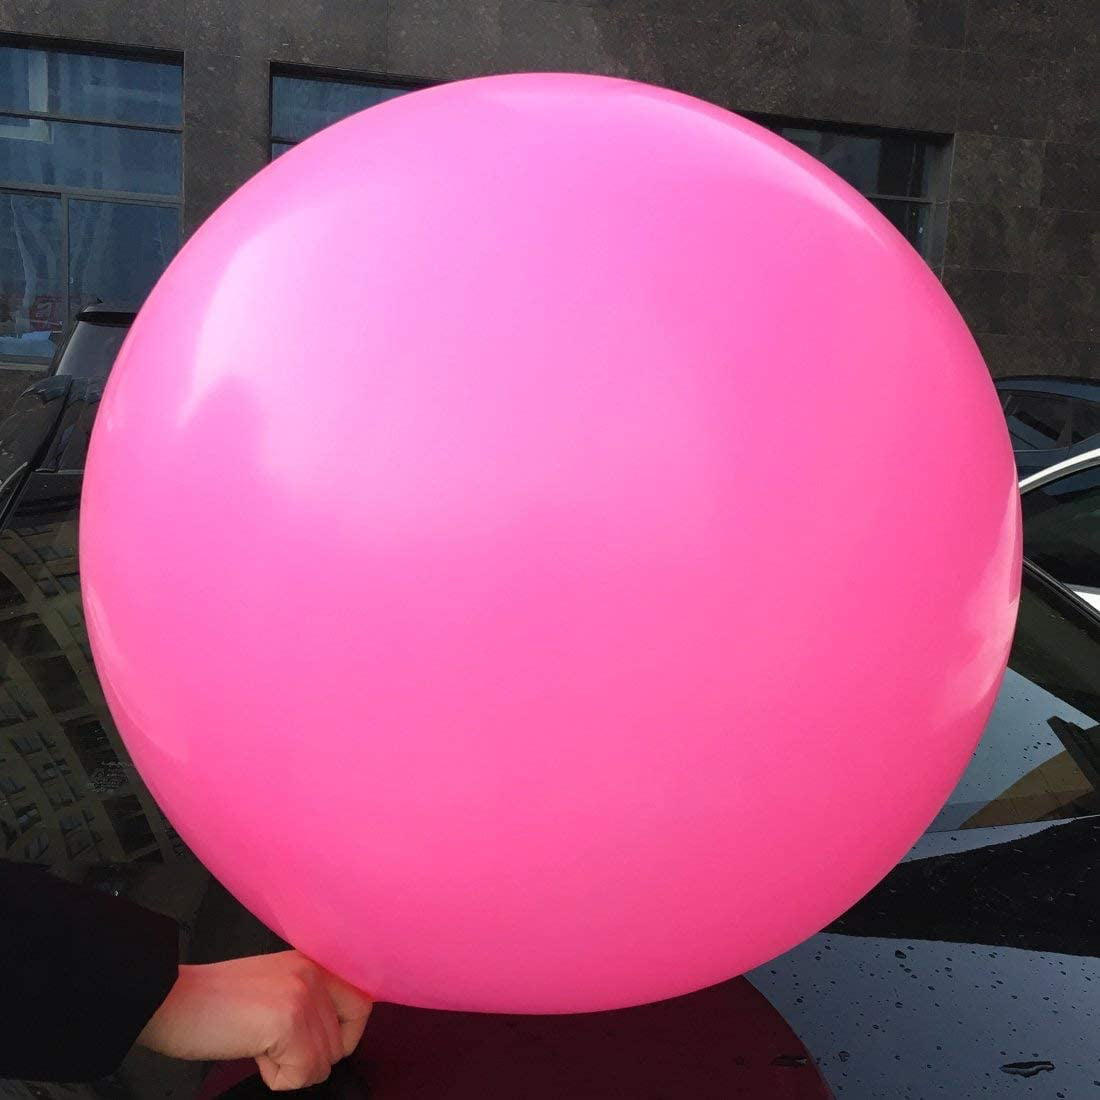 Huge round. Большой круглый шар. Гигантский латексный шар. Большой воздушный шар. Круглый надувной шарик.